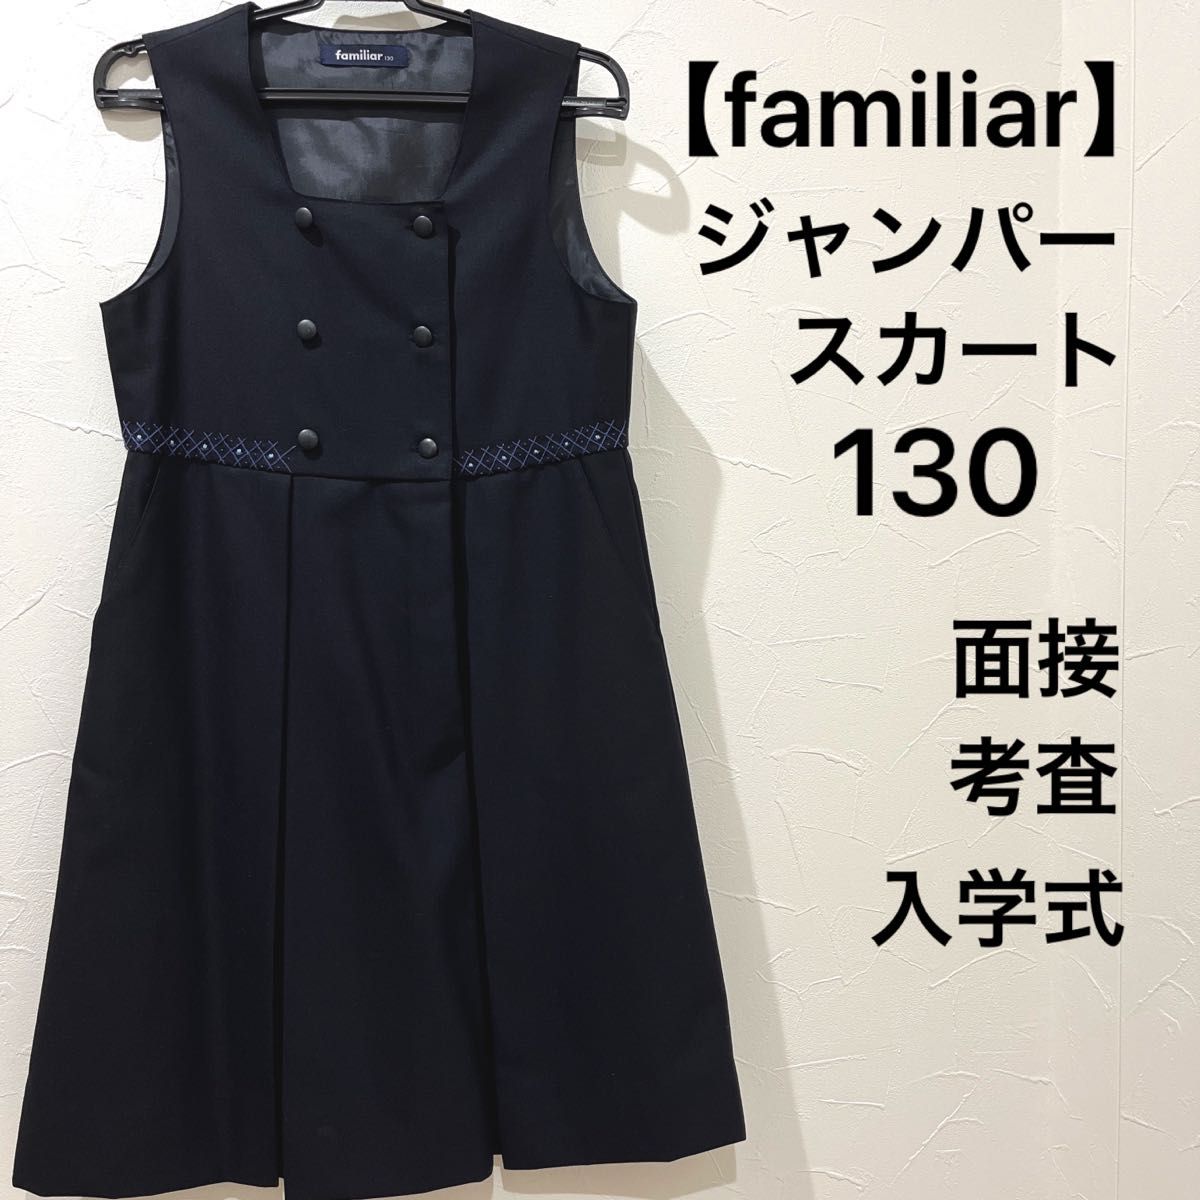 【familiar】ジャンパースカート お受験 130 紺 ワンピース 入学式 ファミリア